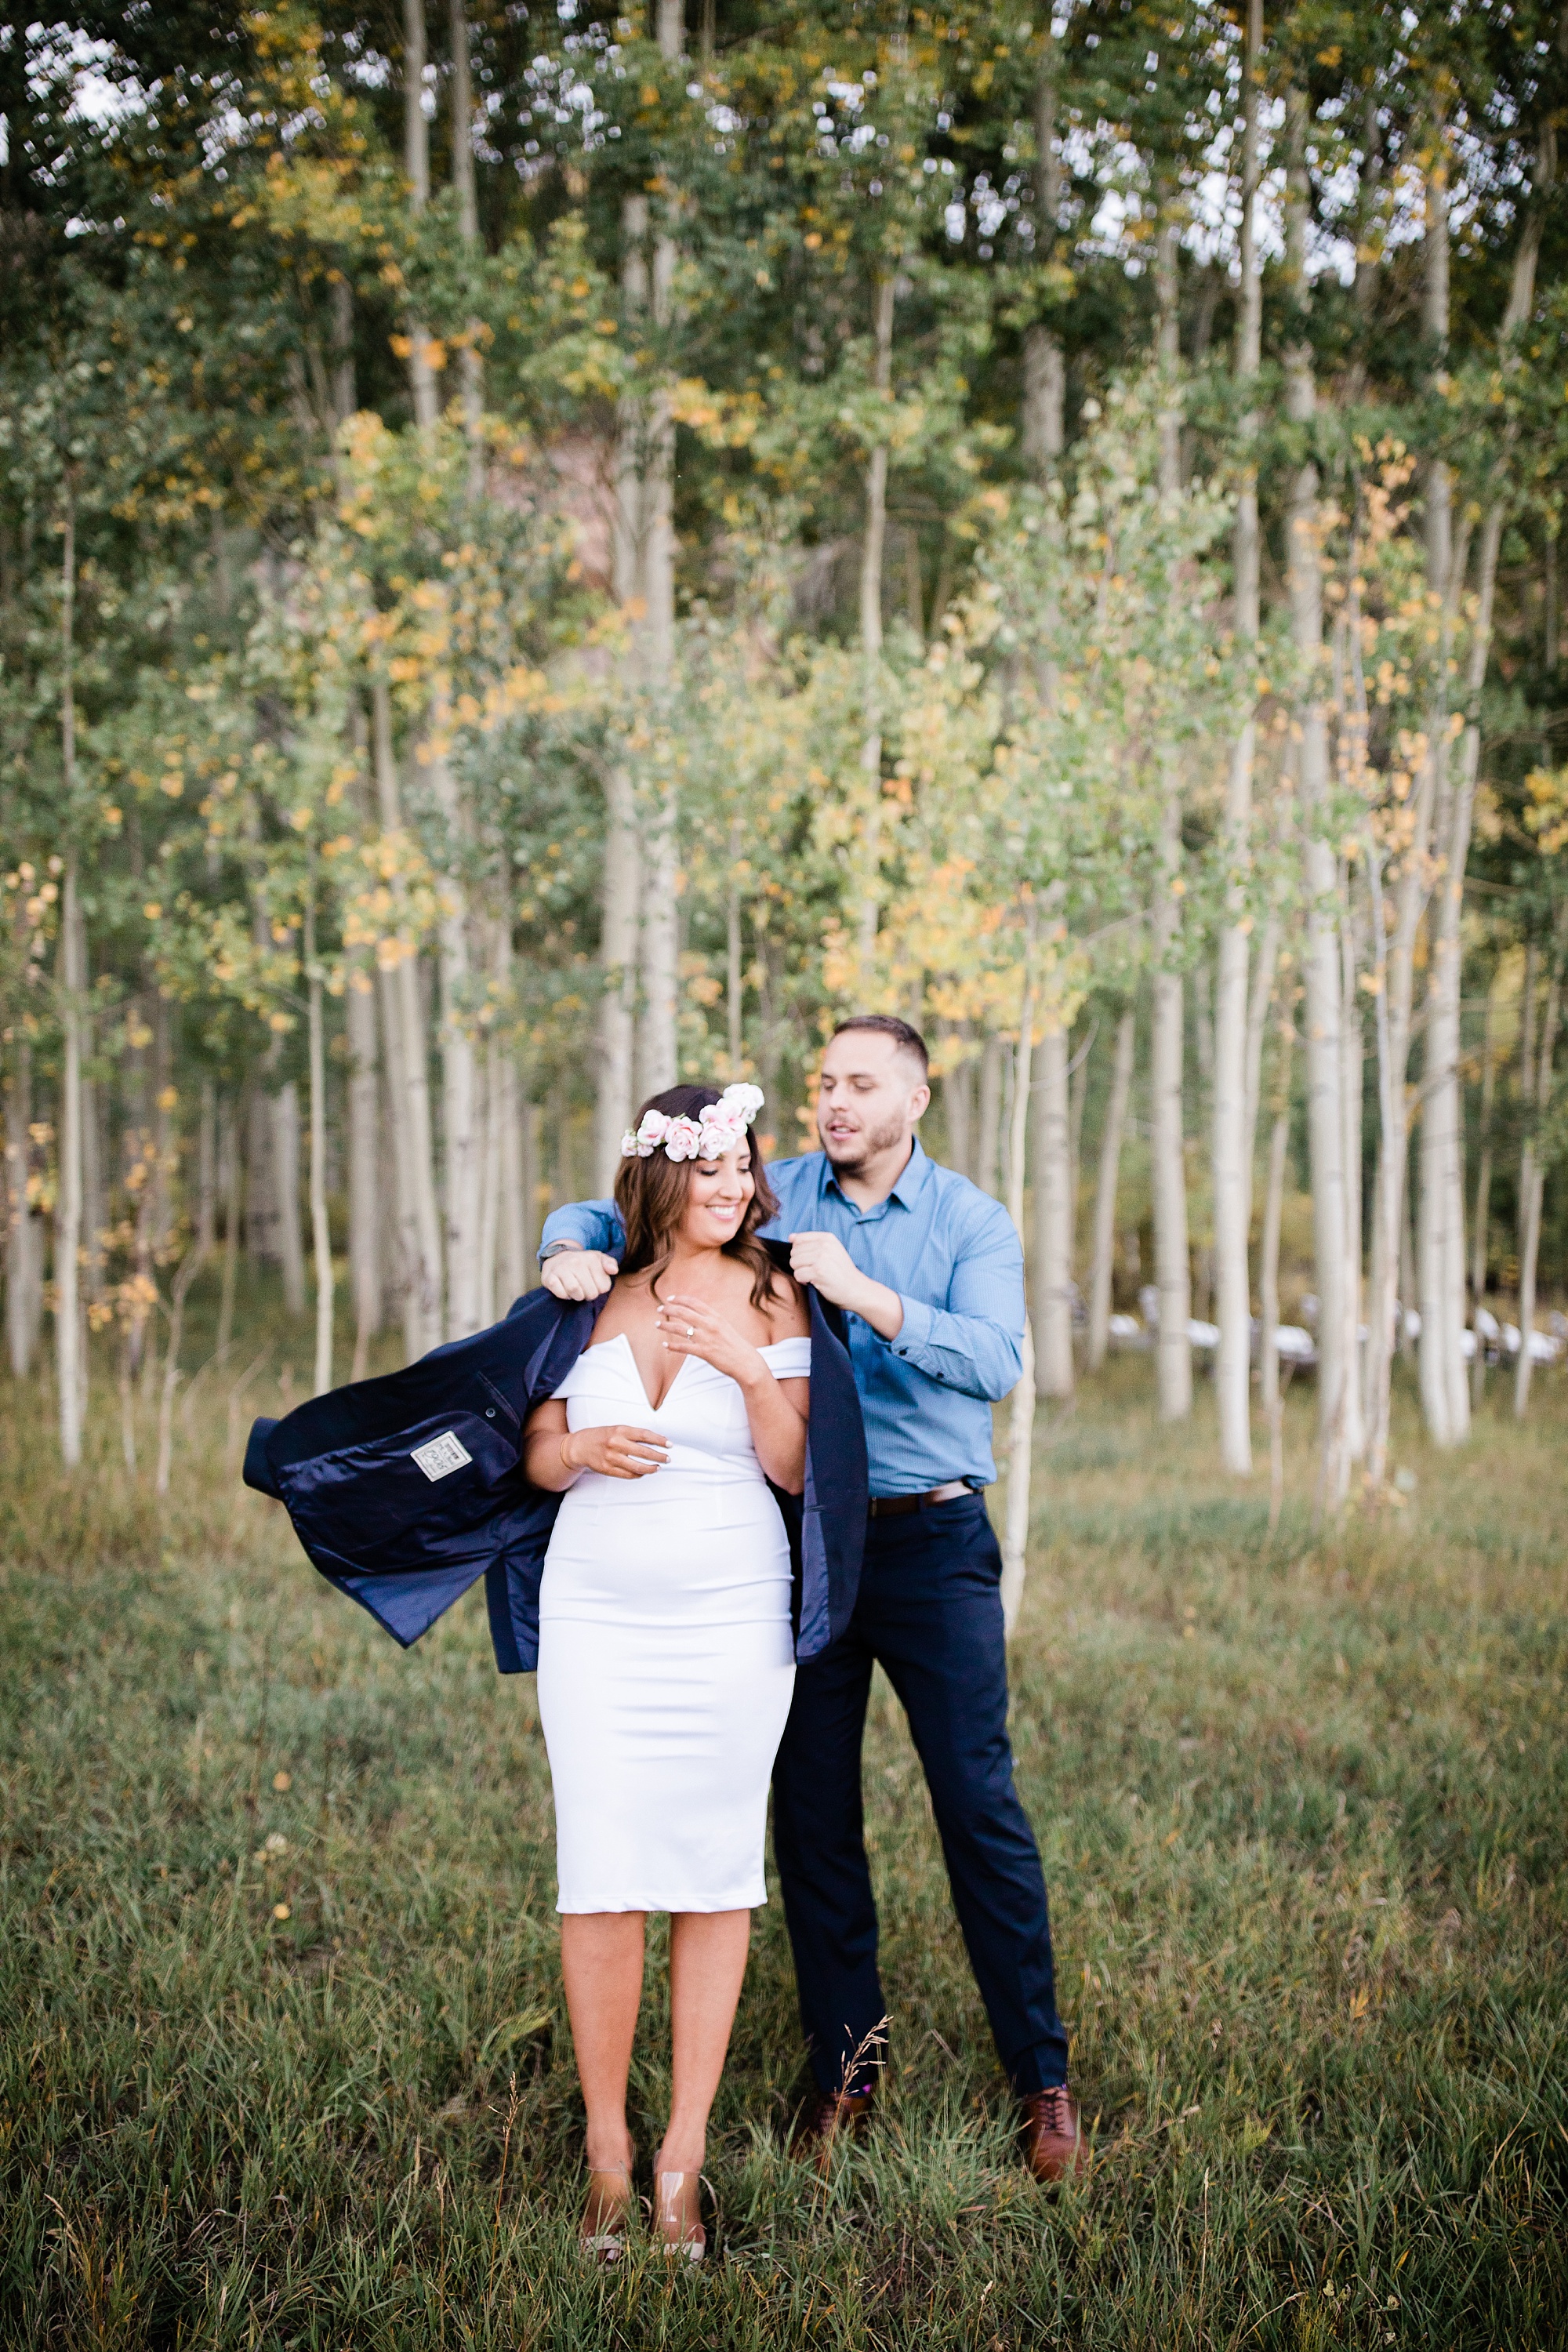 sarah and cameron durango engagement session colorado wedding fall aspen trees hazel and lace photography